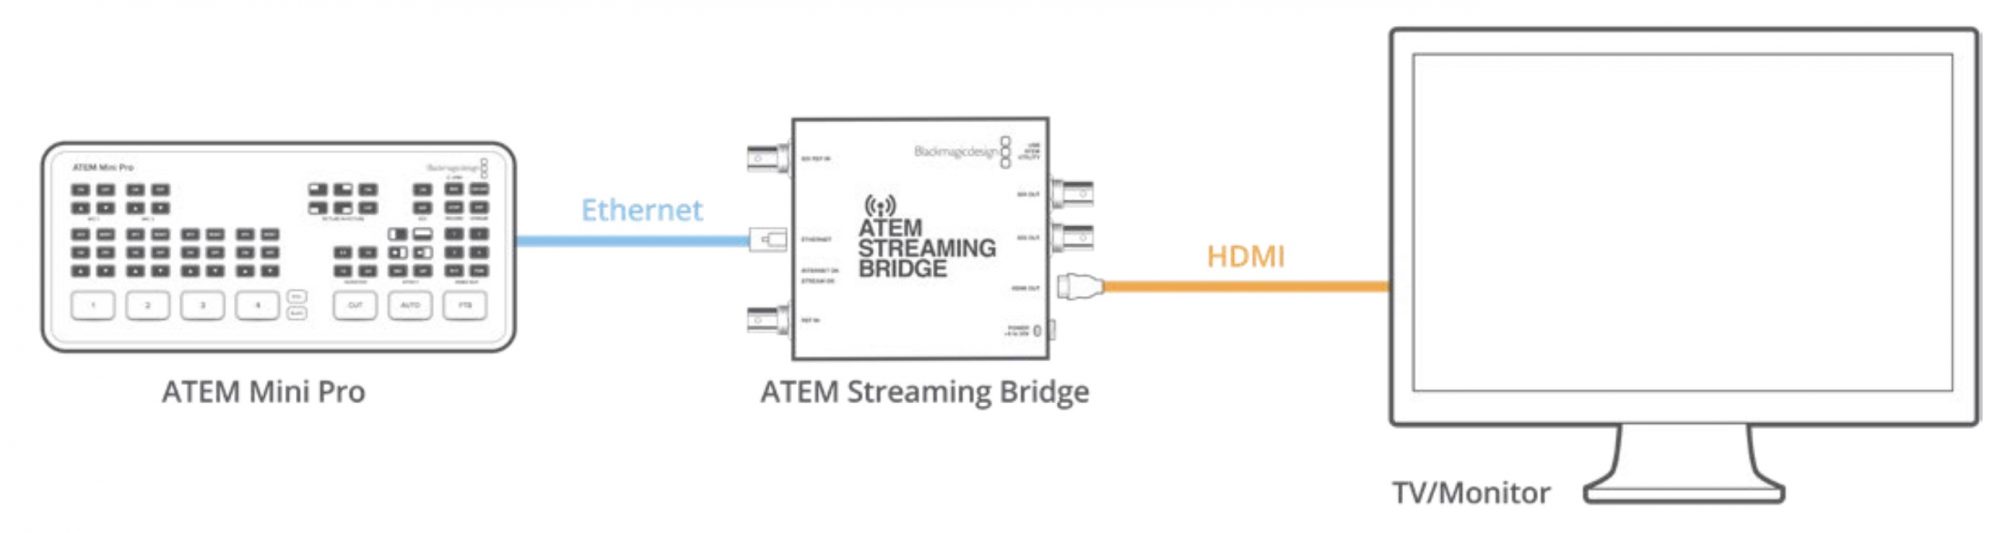 ATEM Streaming Bridge SETUP – MEETUPVIDEO.com